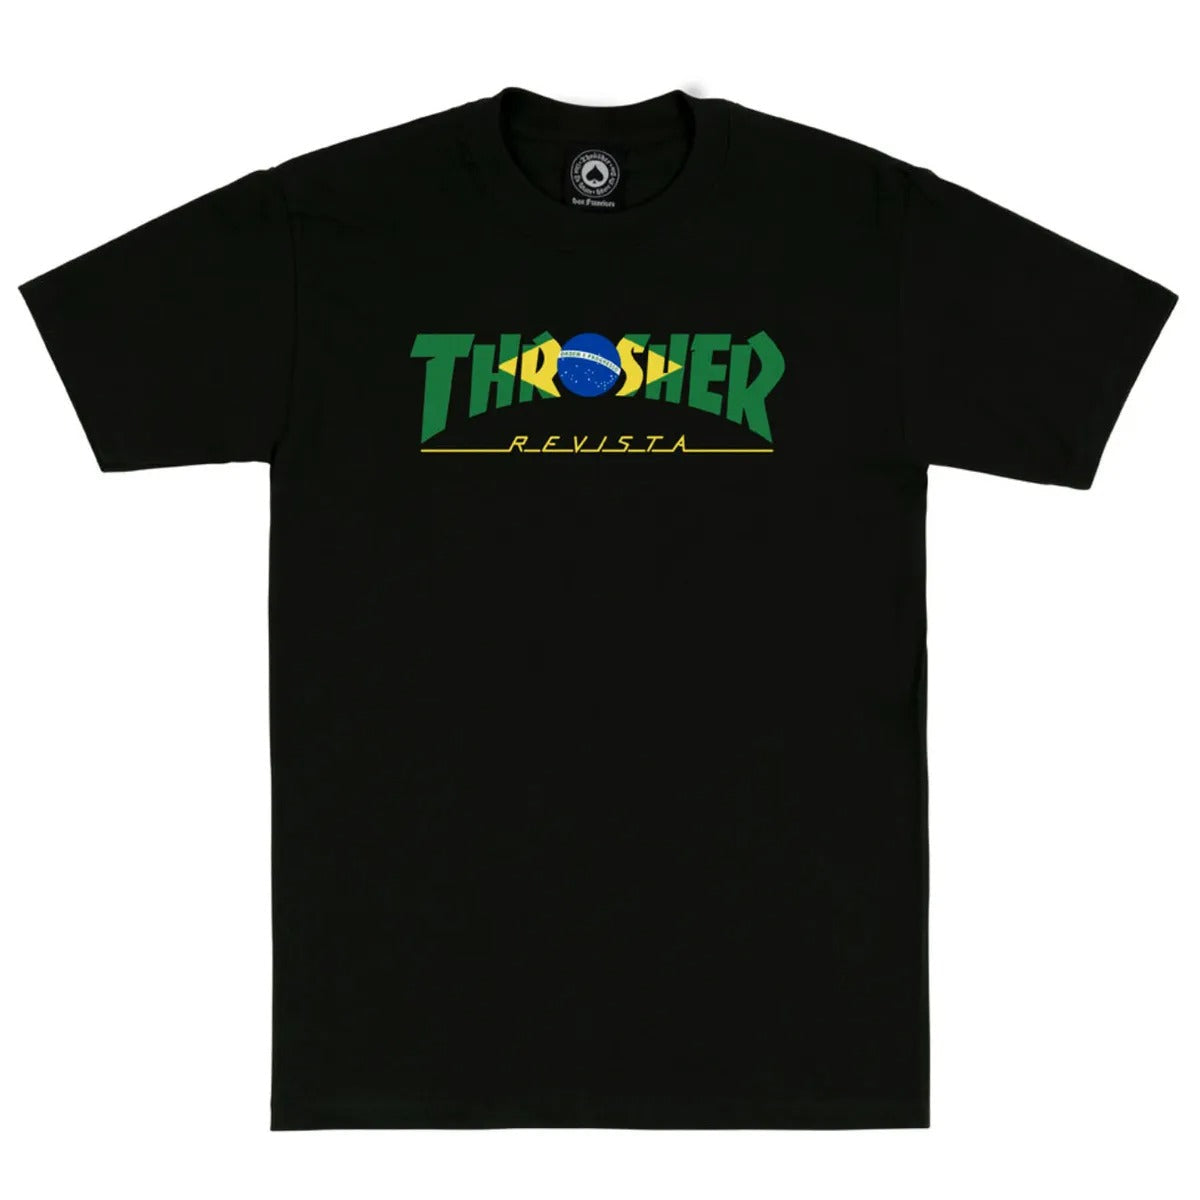 Thrasher - Polera Brazil Revista Black - Lo Mejor De Thrasher - Solo Por $24990! Compra Ahora En Wallride Skateshop